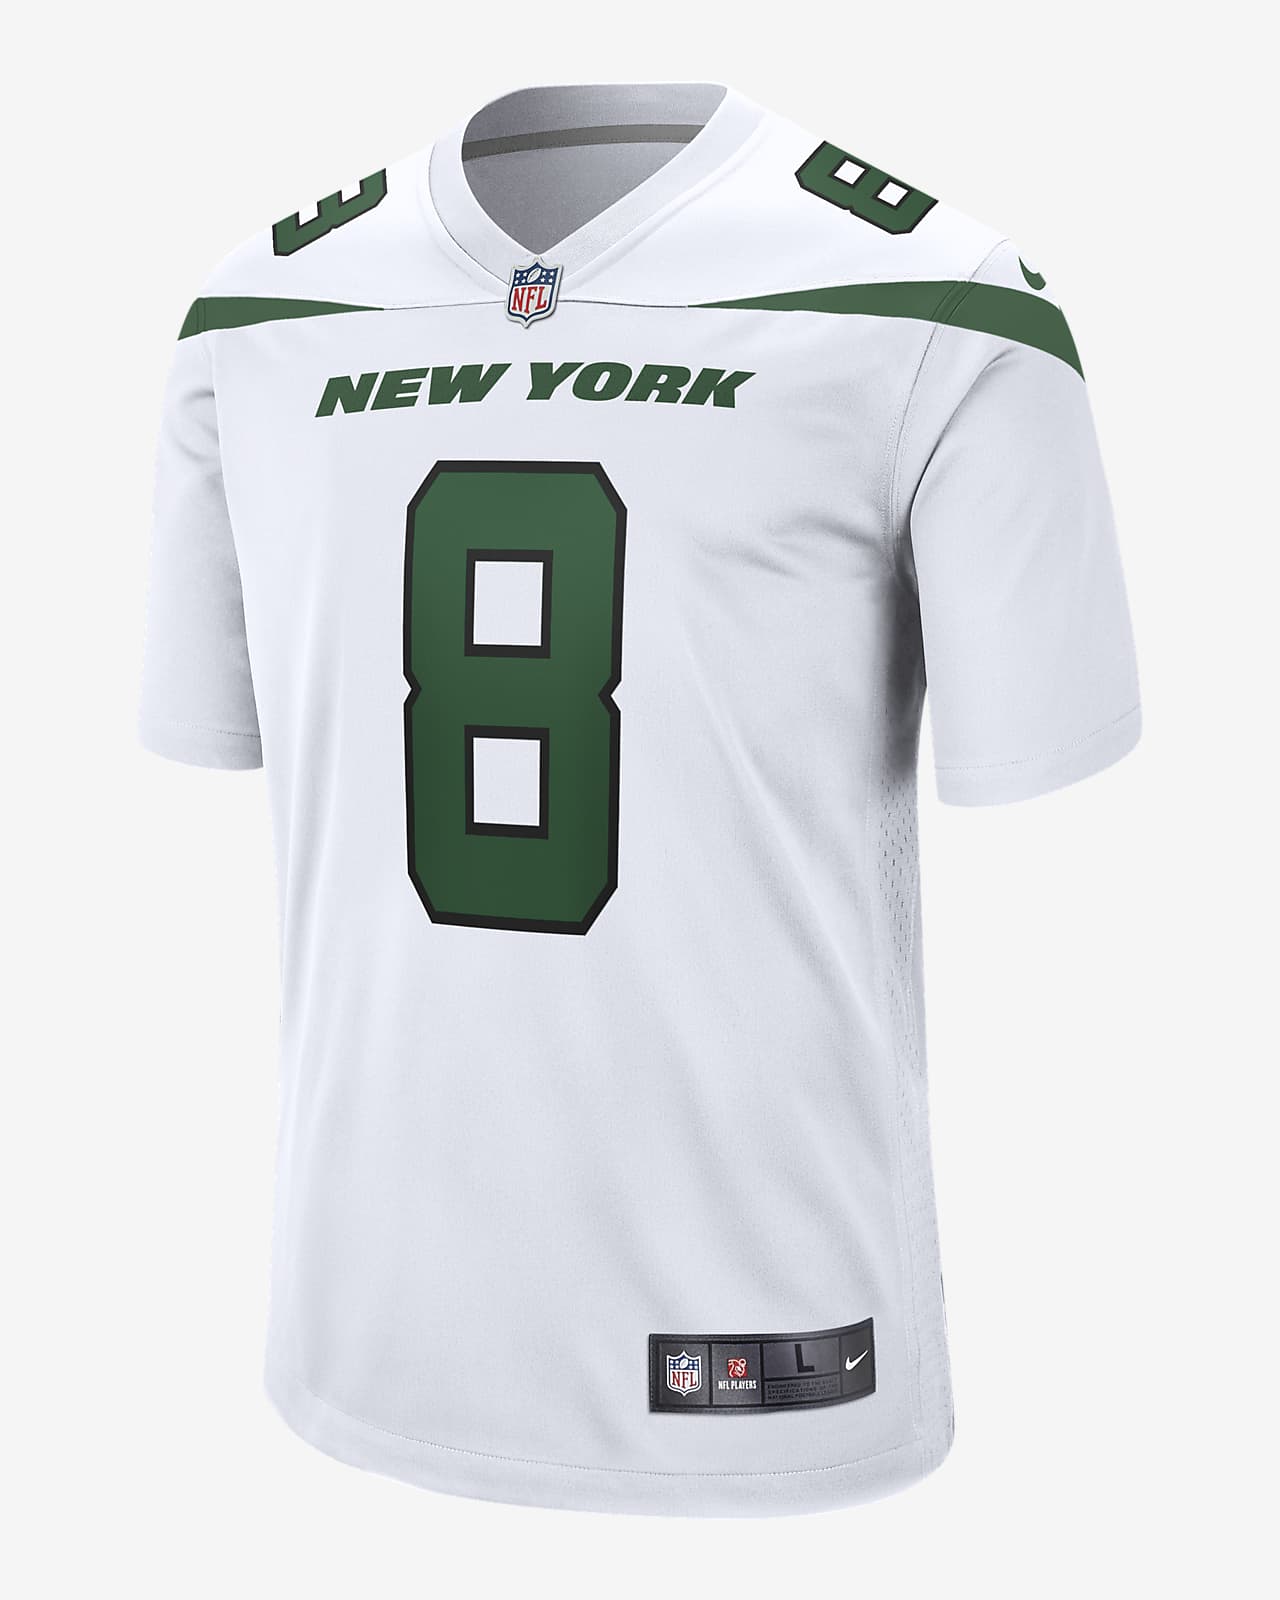 Jersey de fútbol americano Nike de la NFL Game para hombre Aaron Rodgers New York Jets